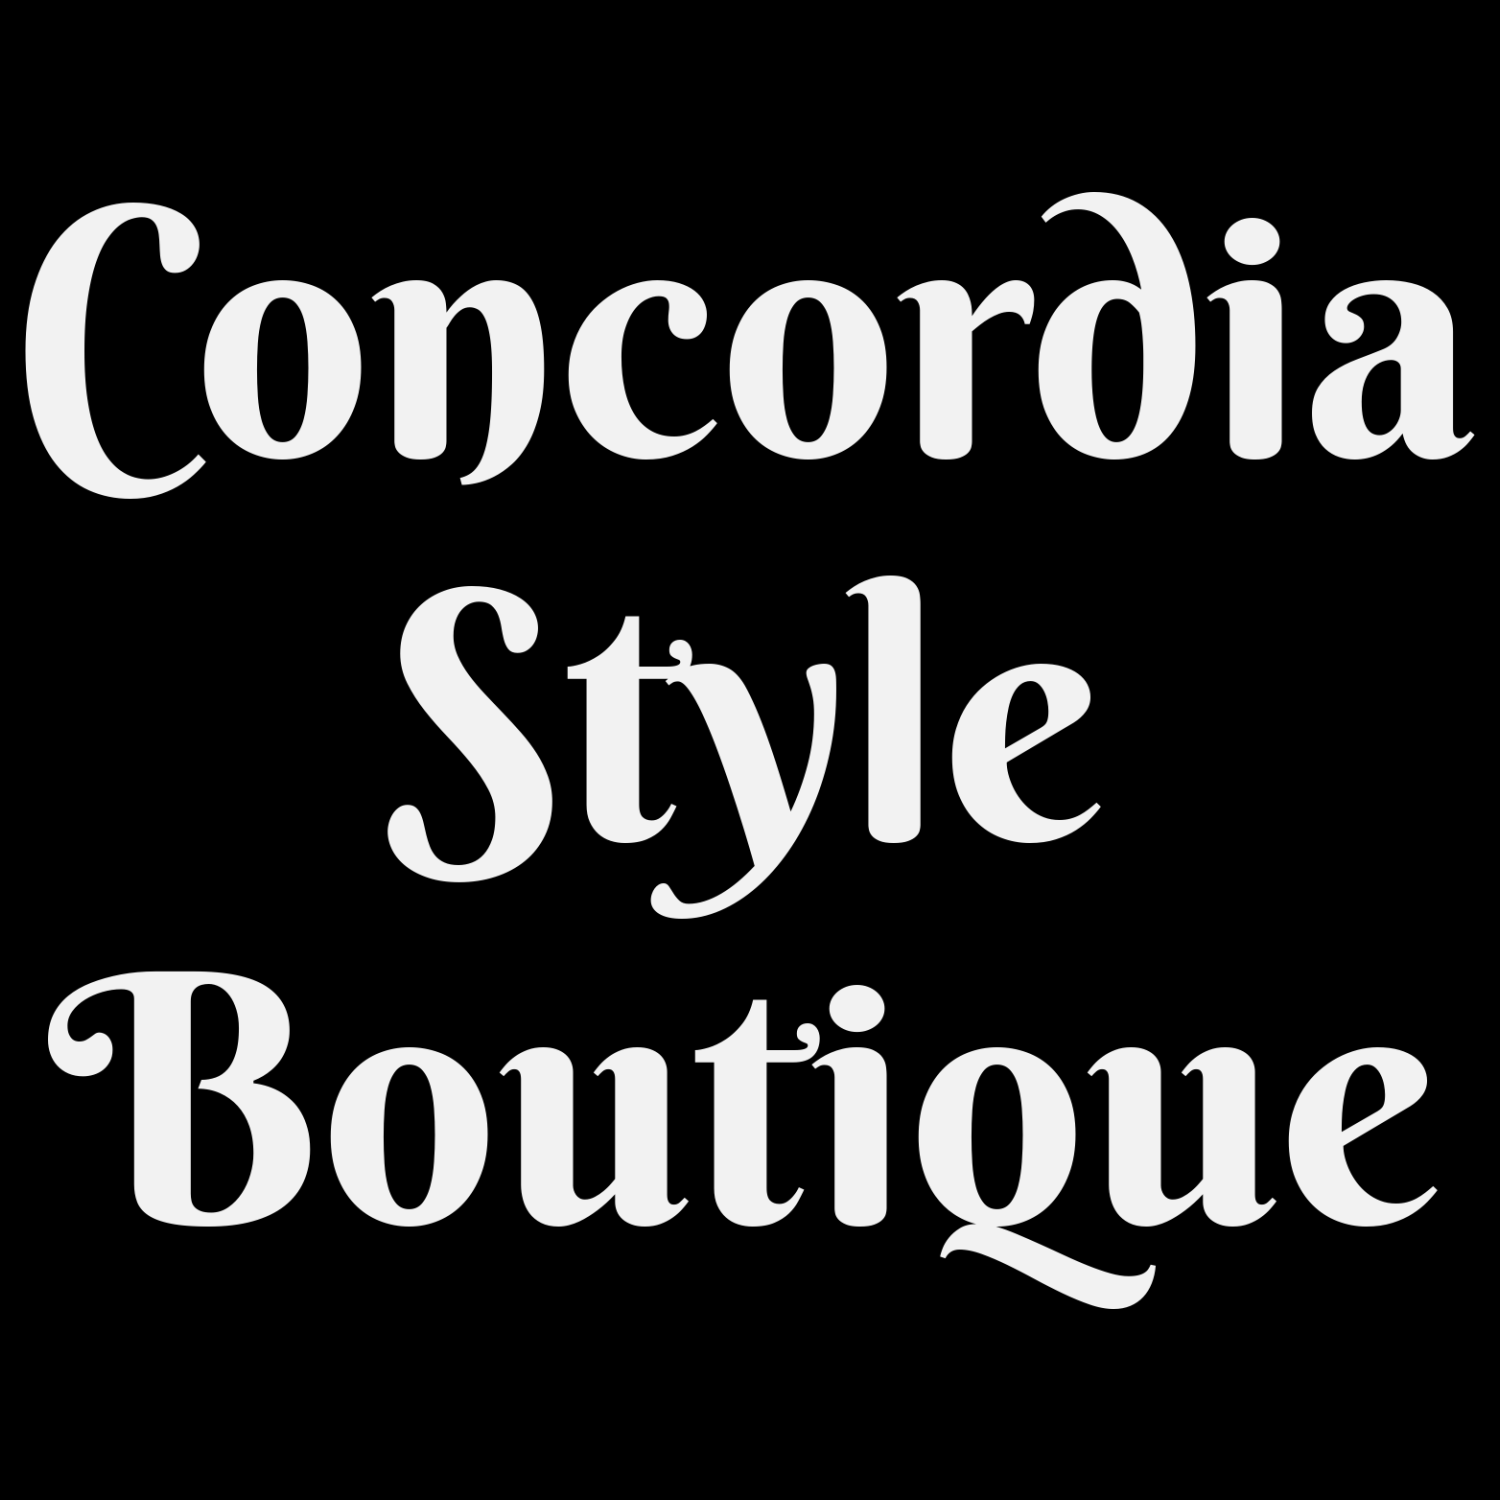 Concordia Style Boutique Gift Cards - Premium Gift Cards from Concordia Style Boutique - Just $5! Shop now at Concordia Style Boutique